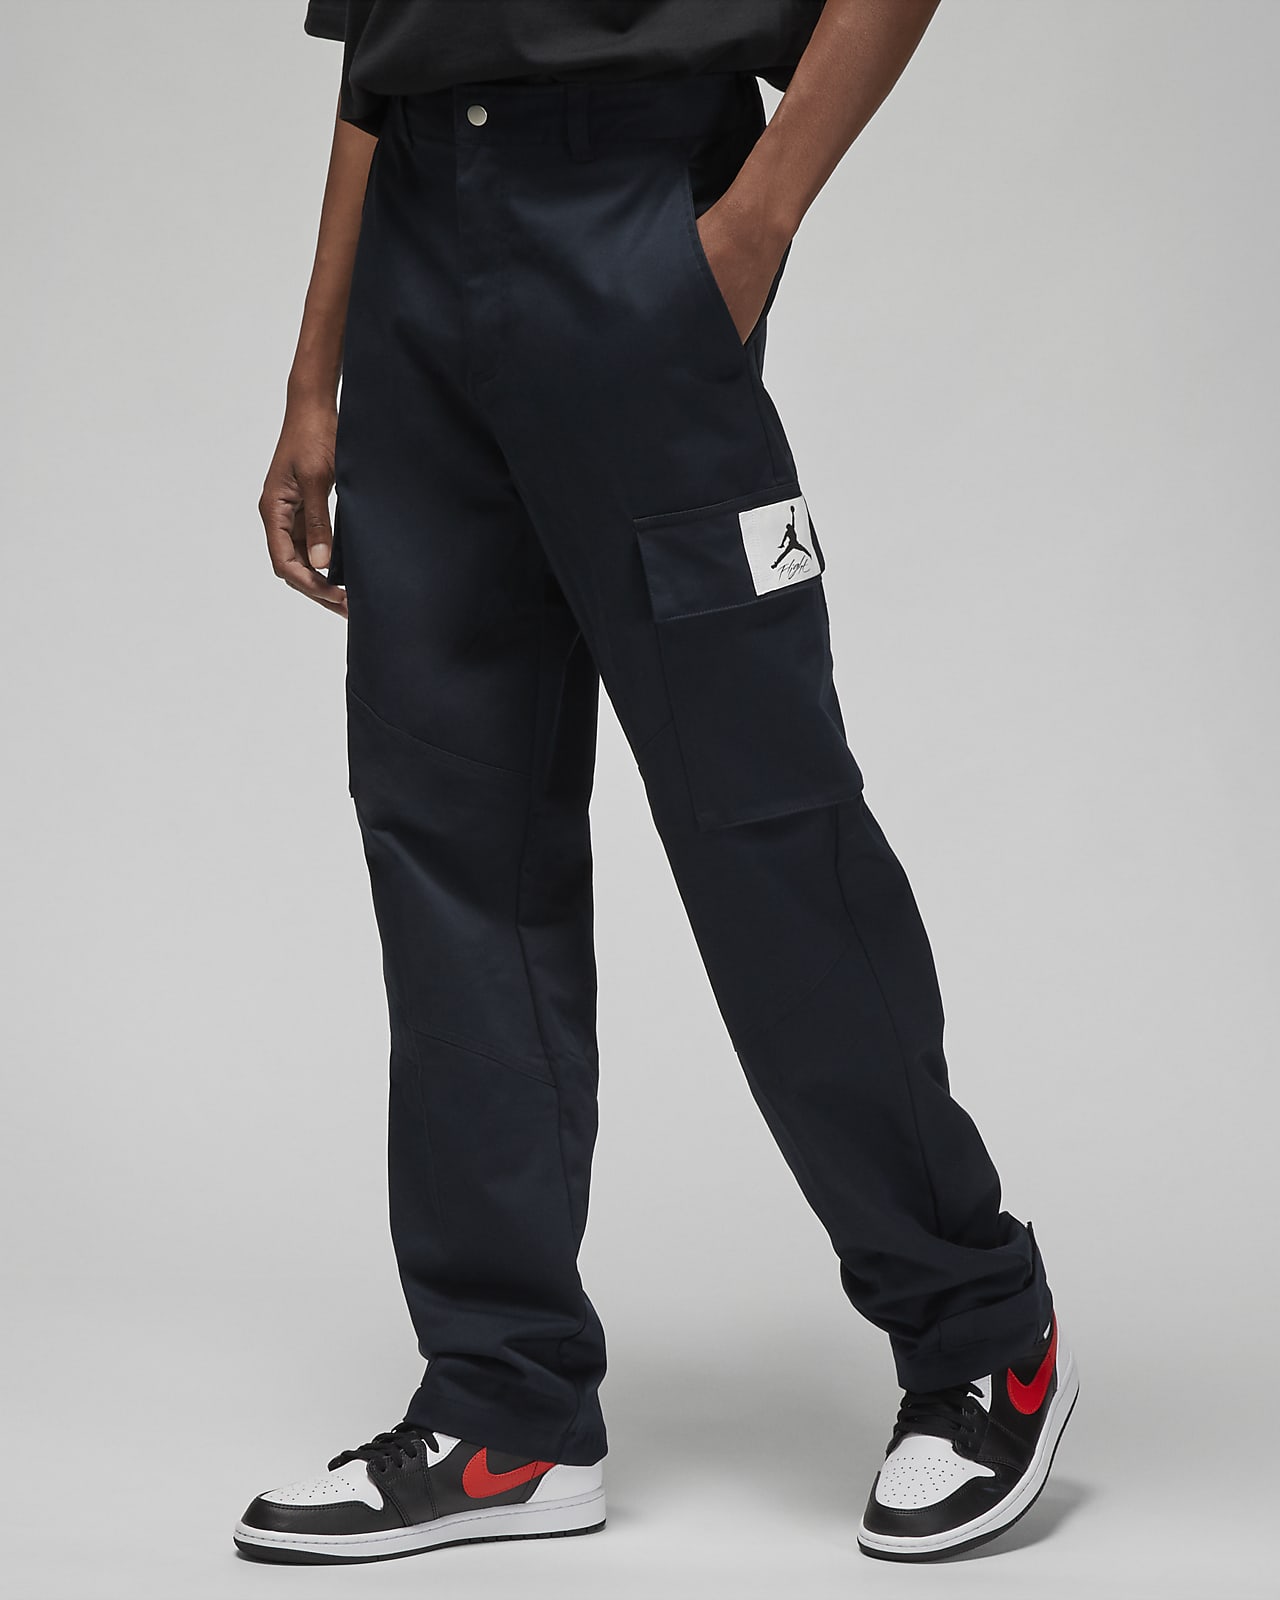 Abolido Tren Demonio Jordan Essentials Men's Utility Trousers. Nike LU